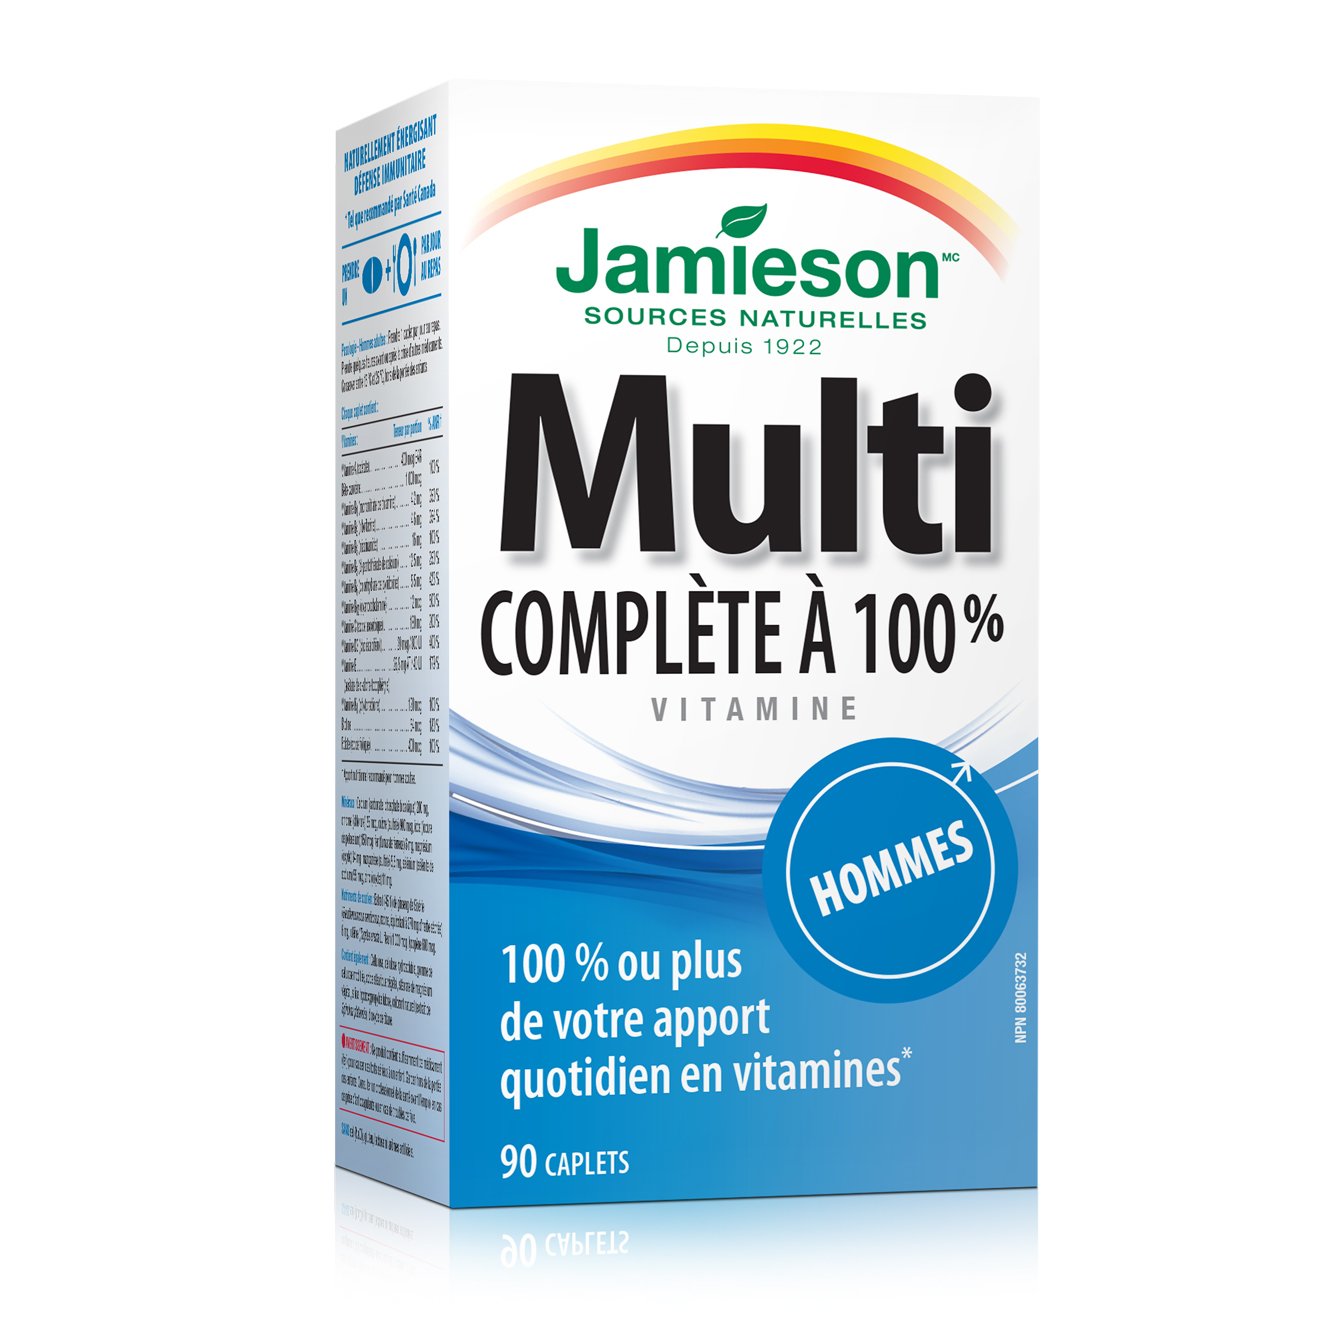 7870_100% Complete Multivitamin for Men_Pack_White Background fr